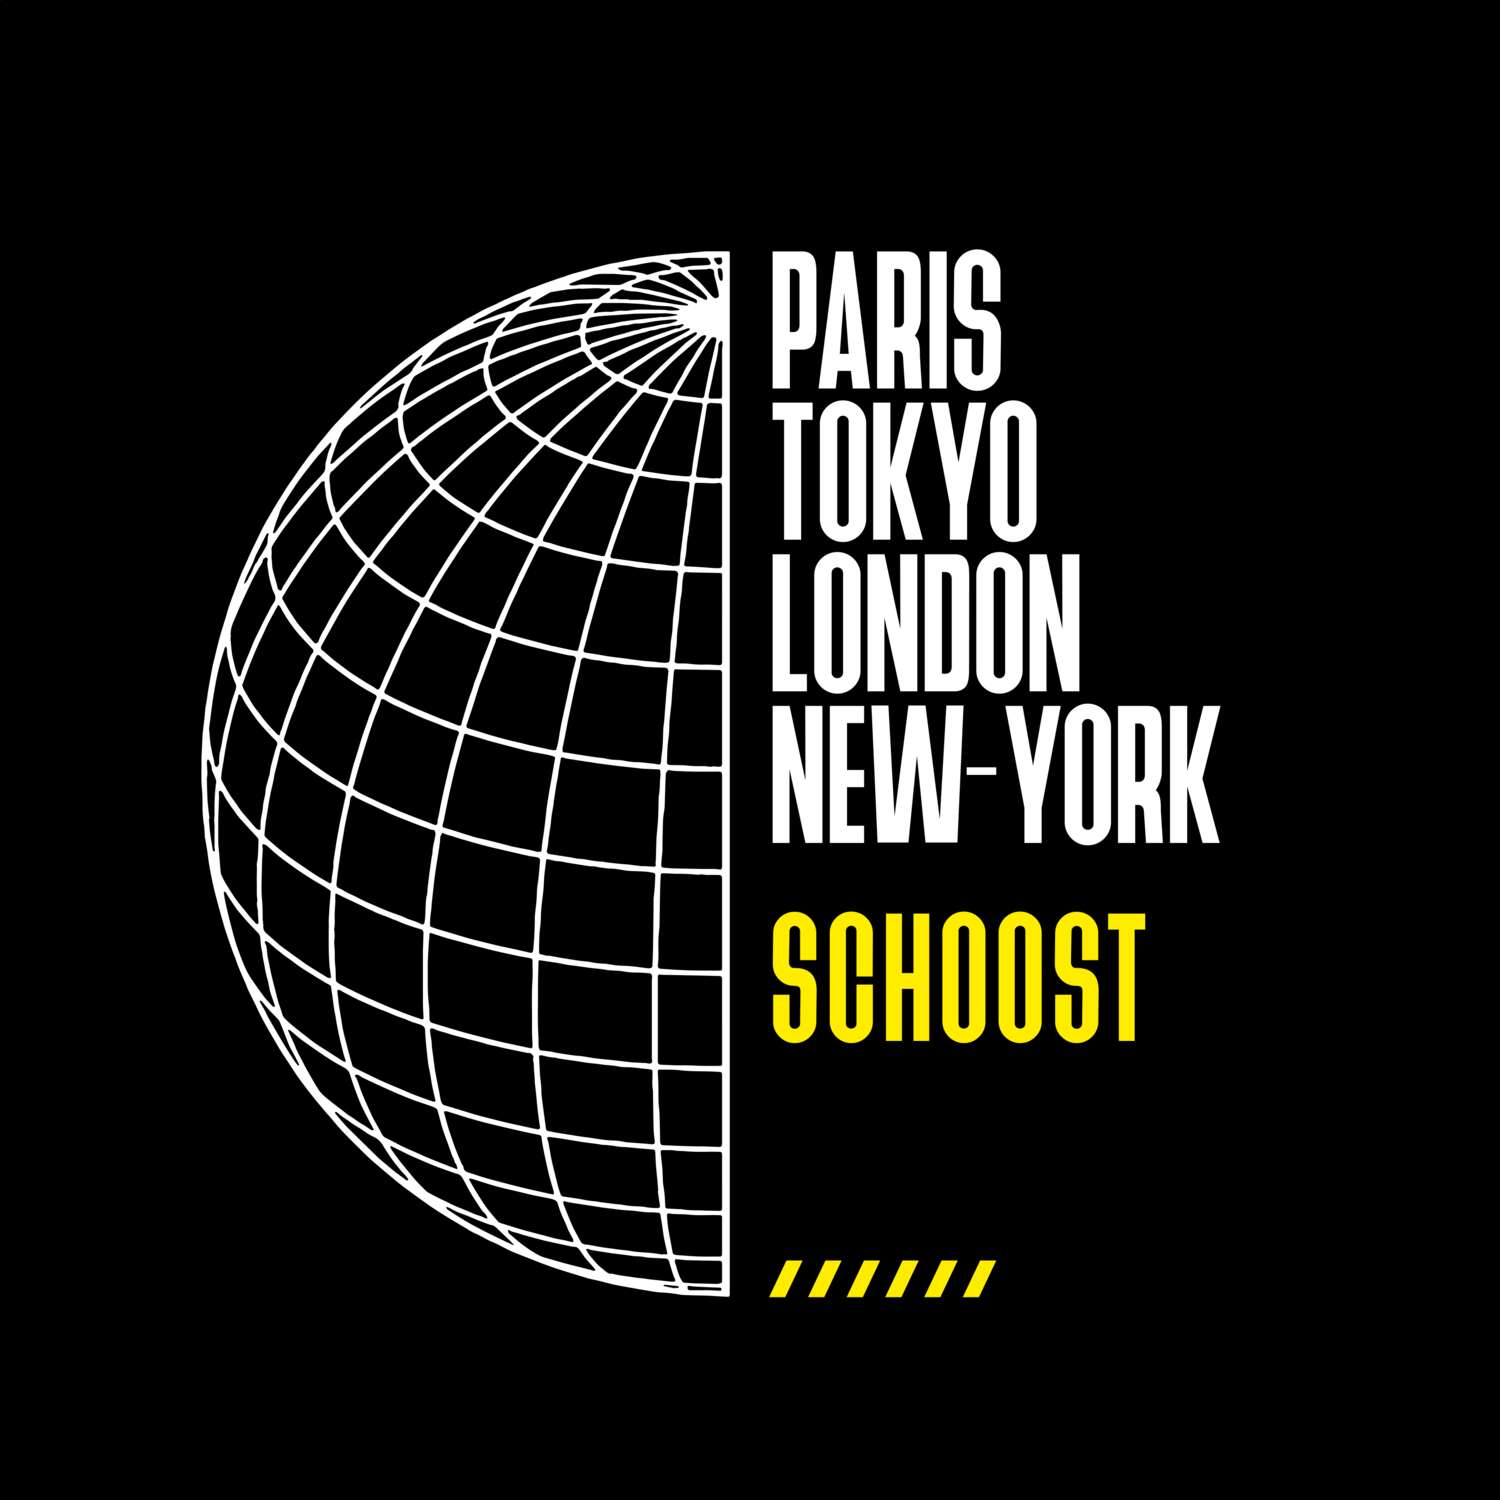 Schoost T-Shirt »Paris Tokyo London«